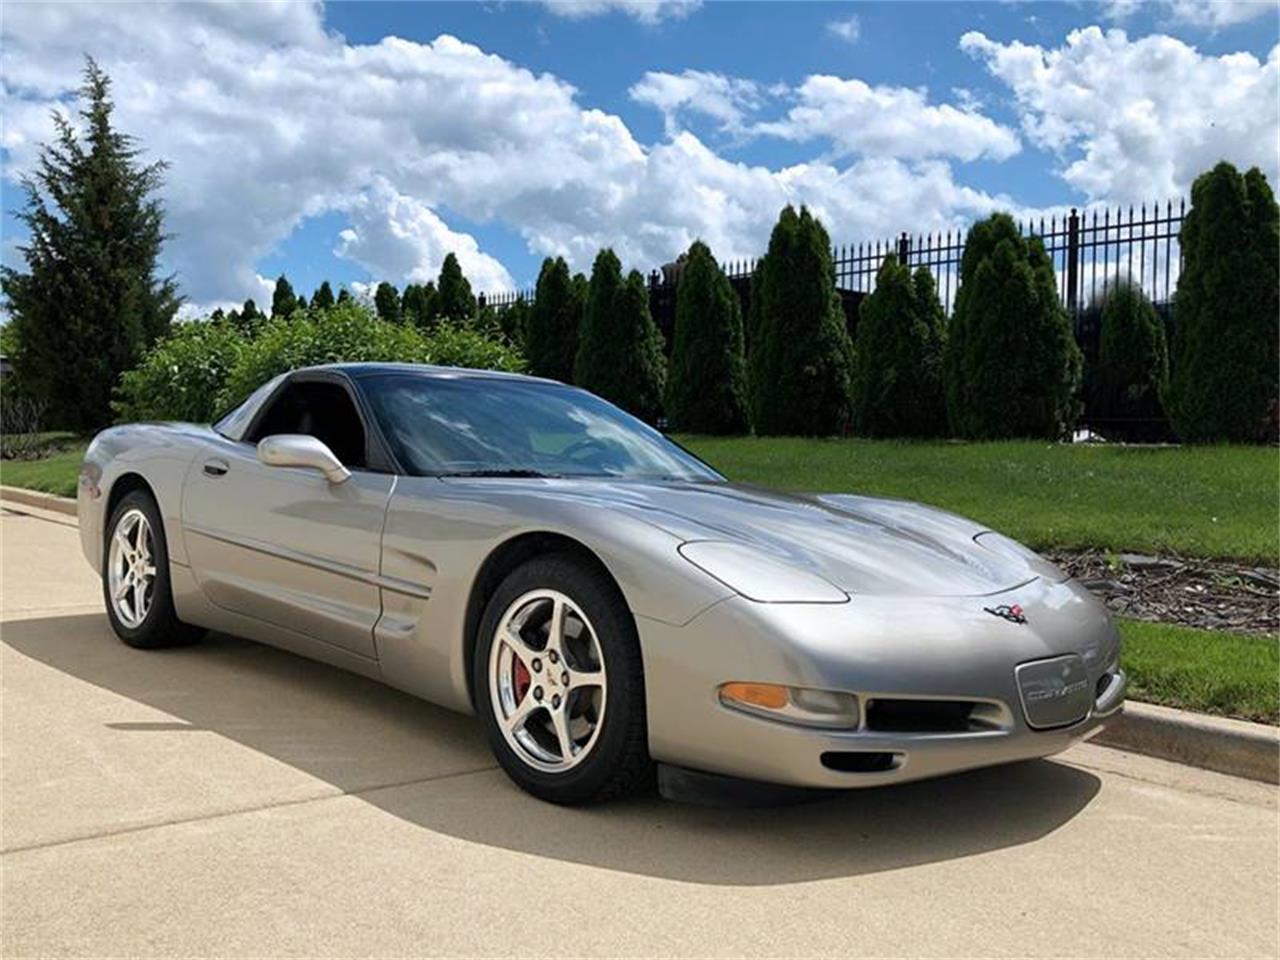 2000 Corvette Common Issues | CorvSport.com